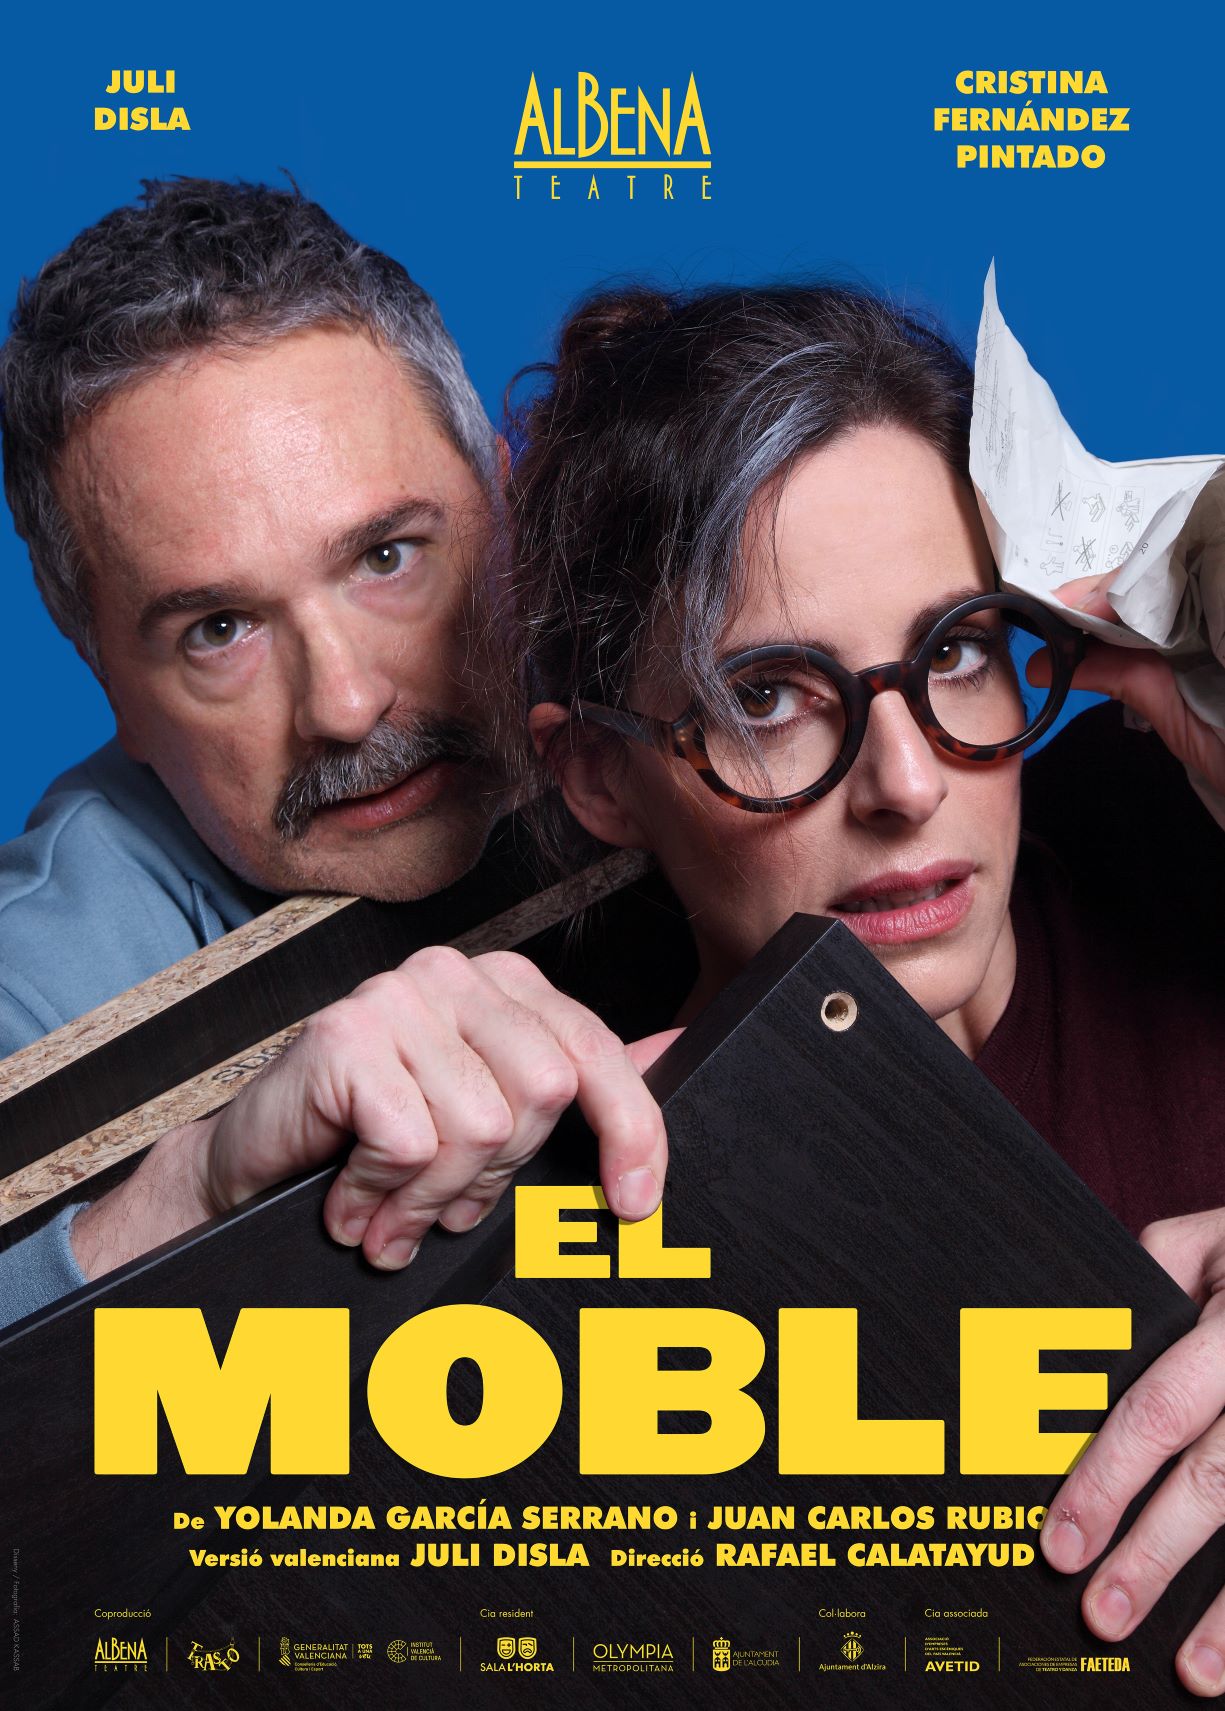 Albena Teatre presenta “EL MOBLE”